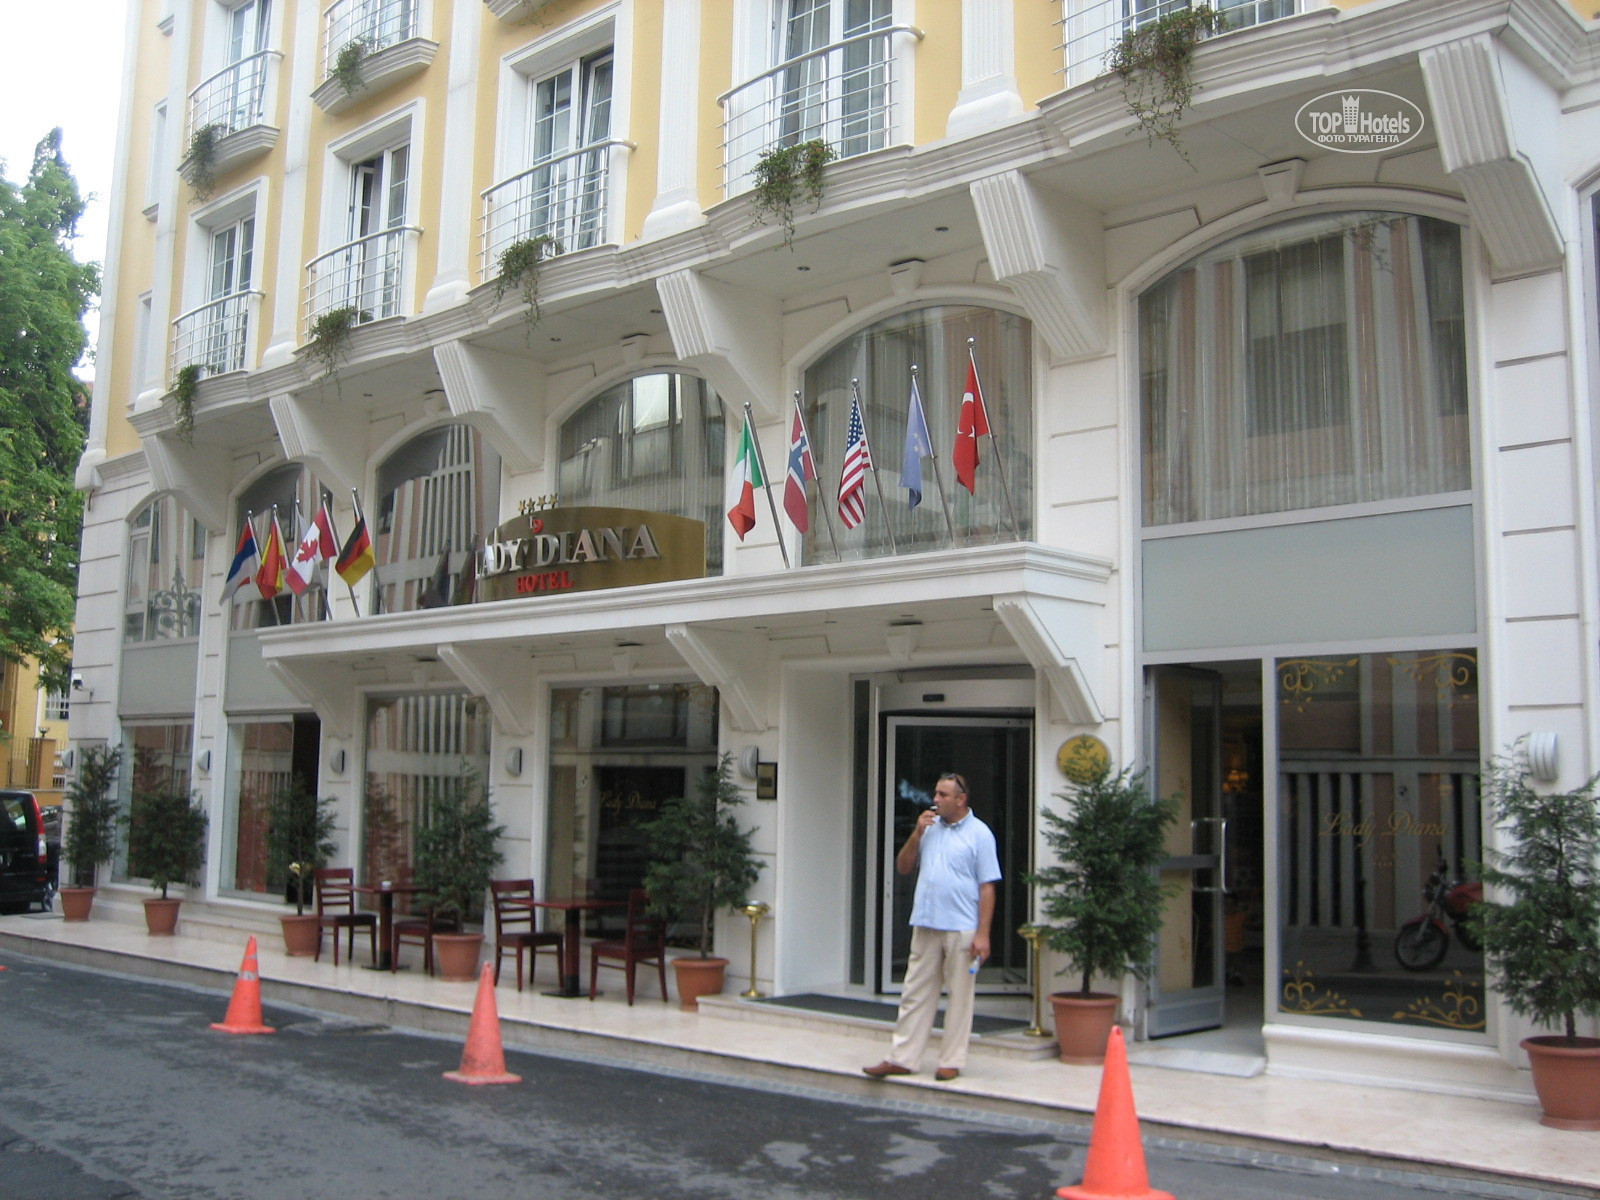 Lady Diana Hotel 4*